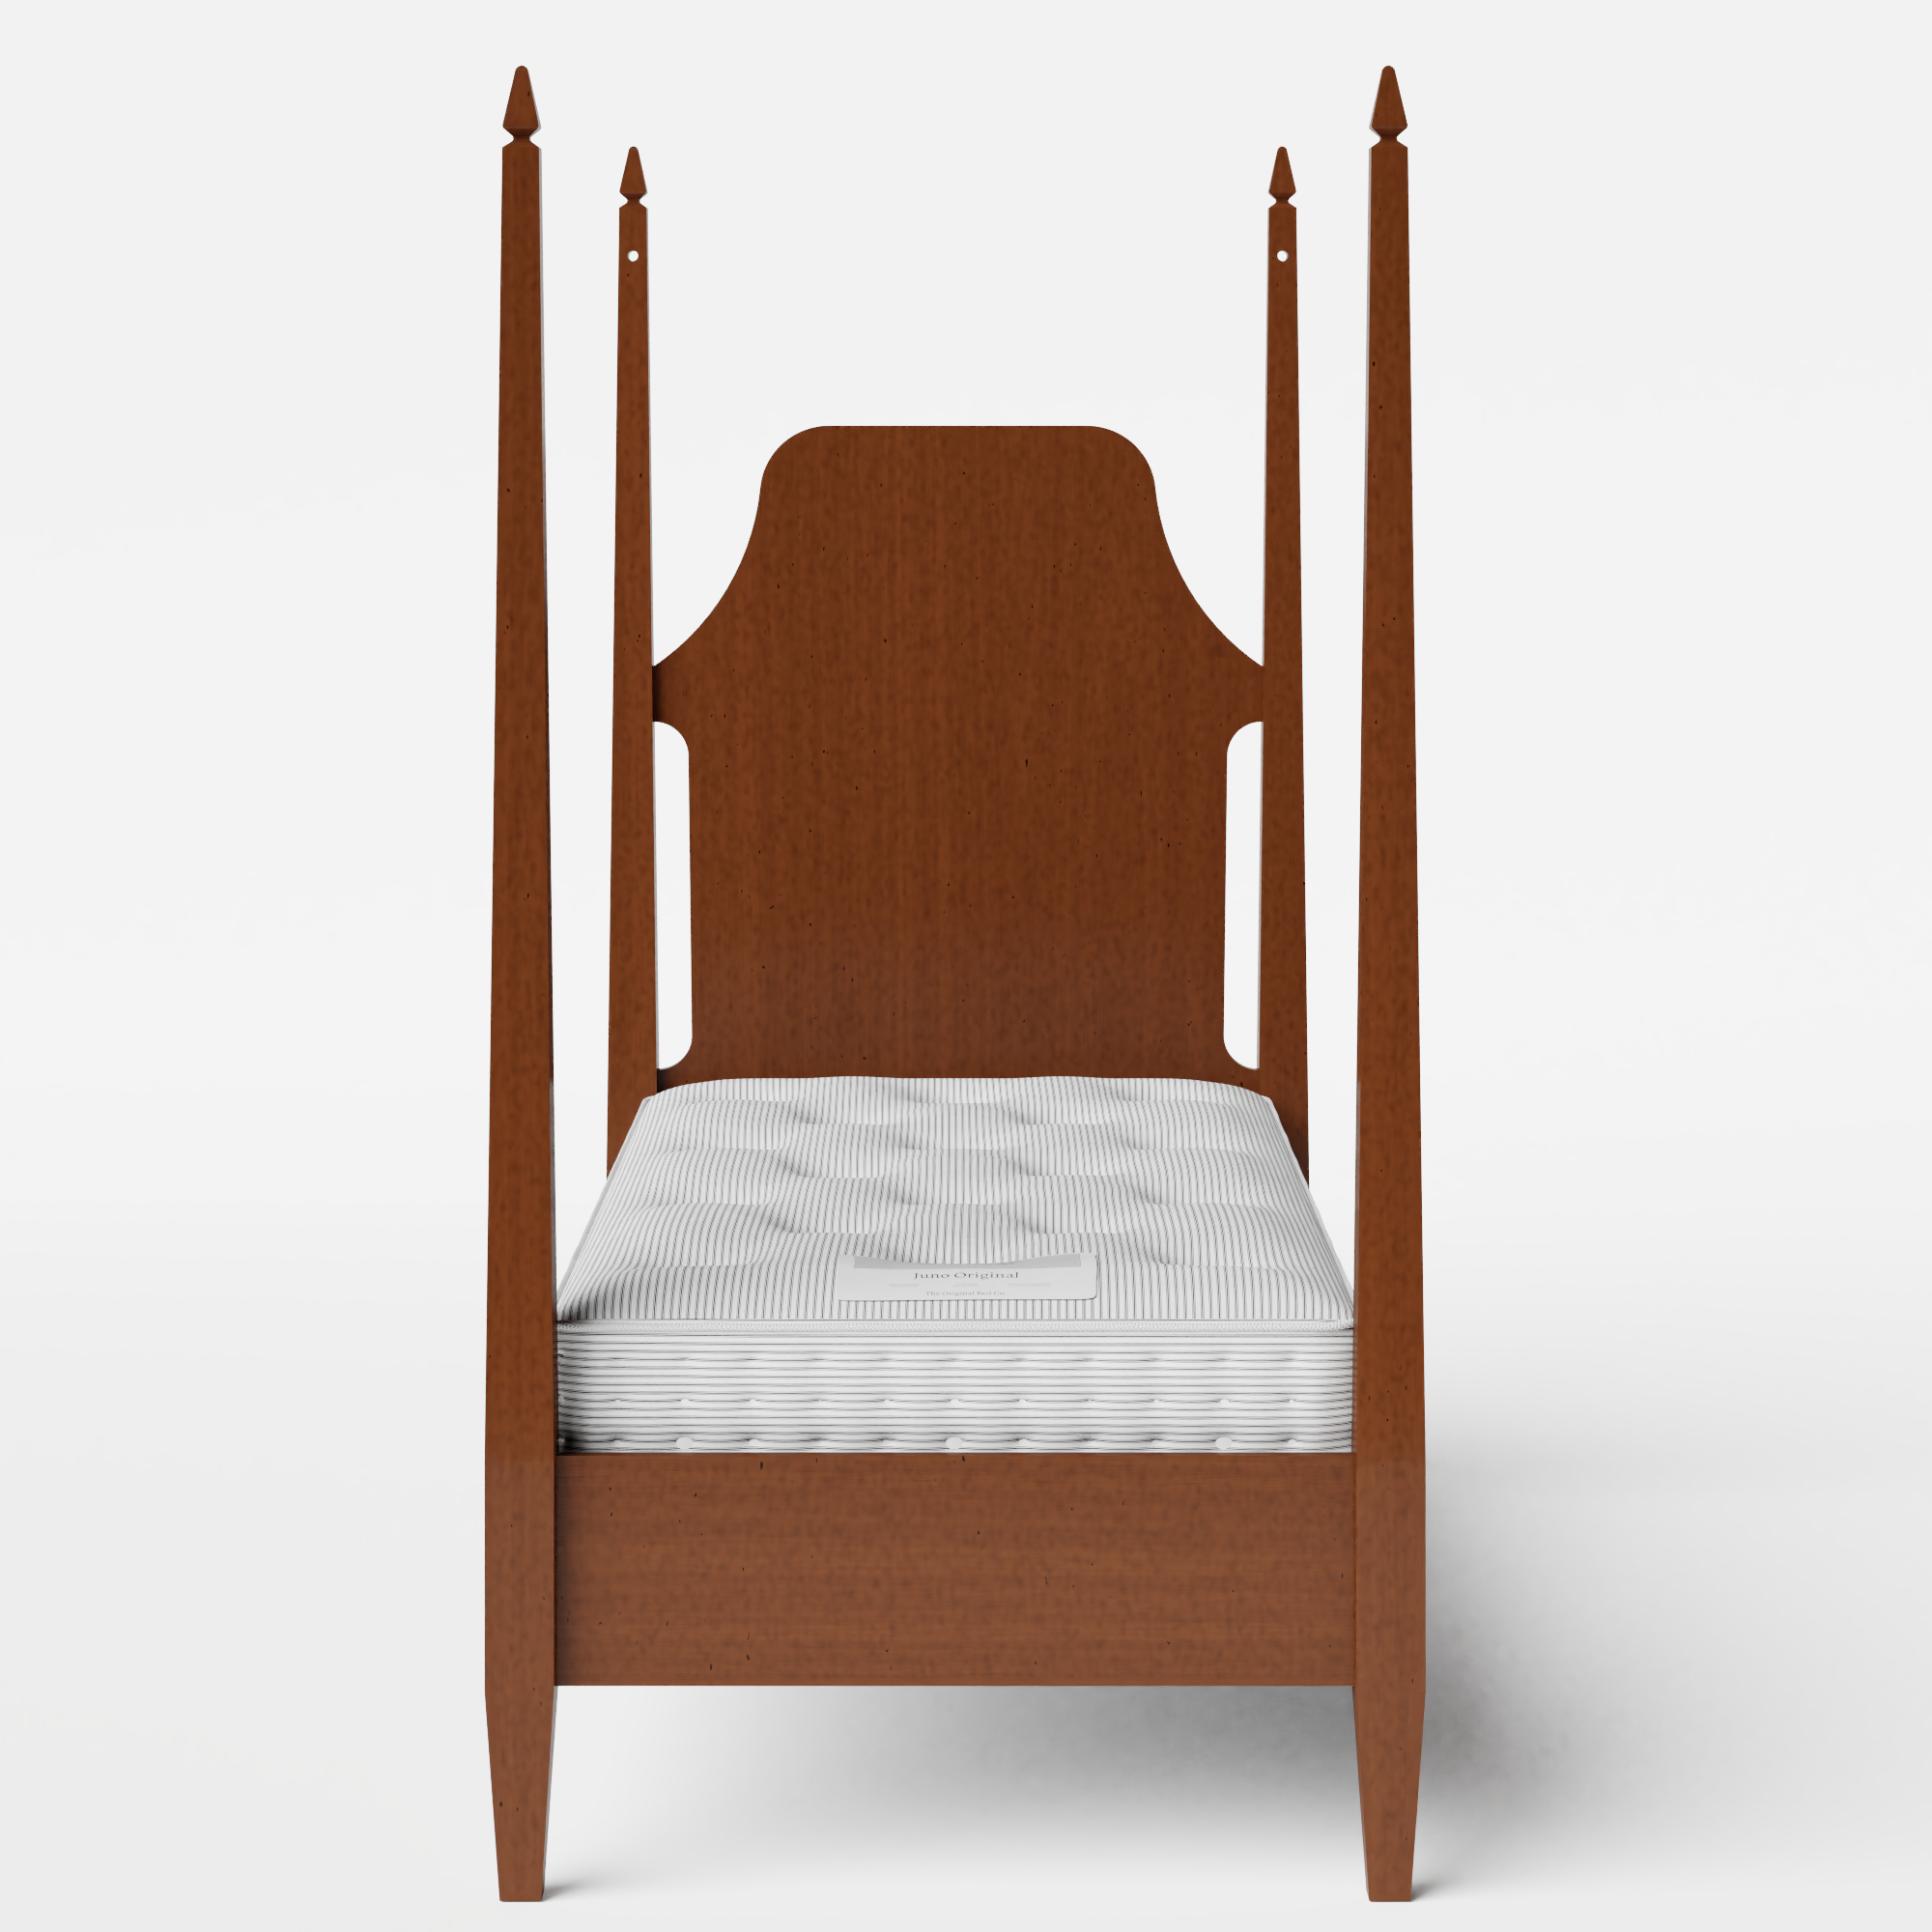 Turner single wood bed in dark cherry with Juno mattress